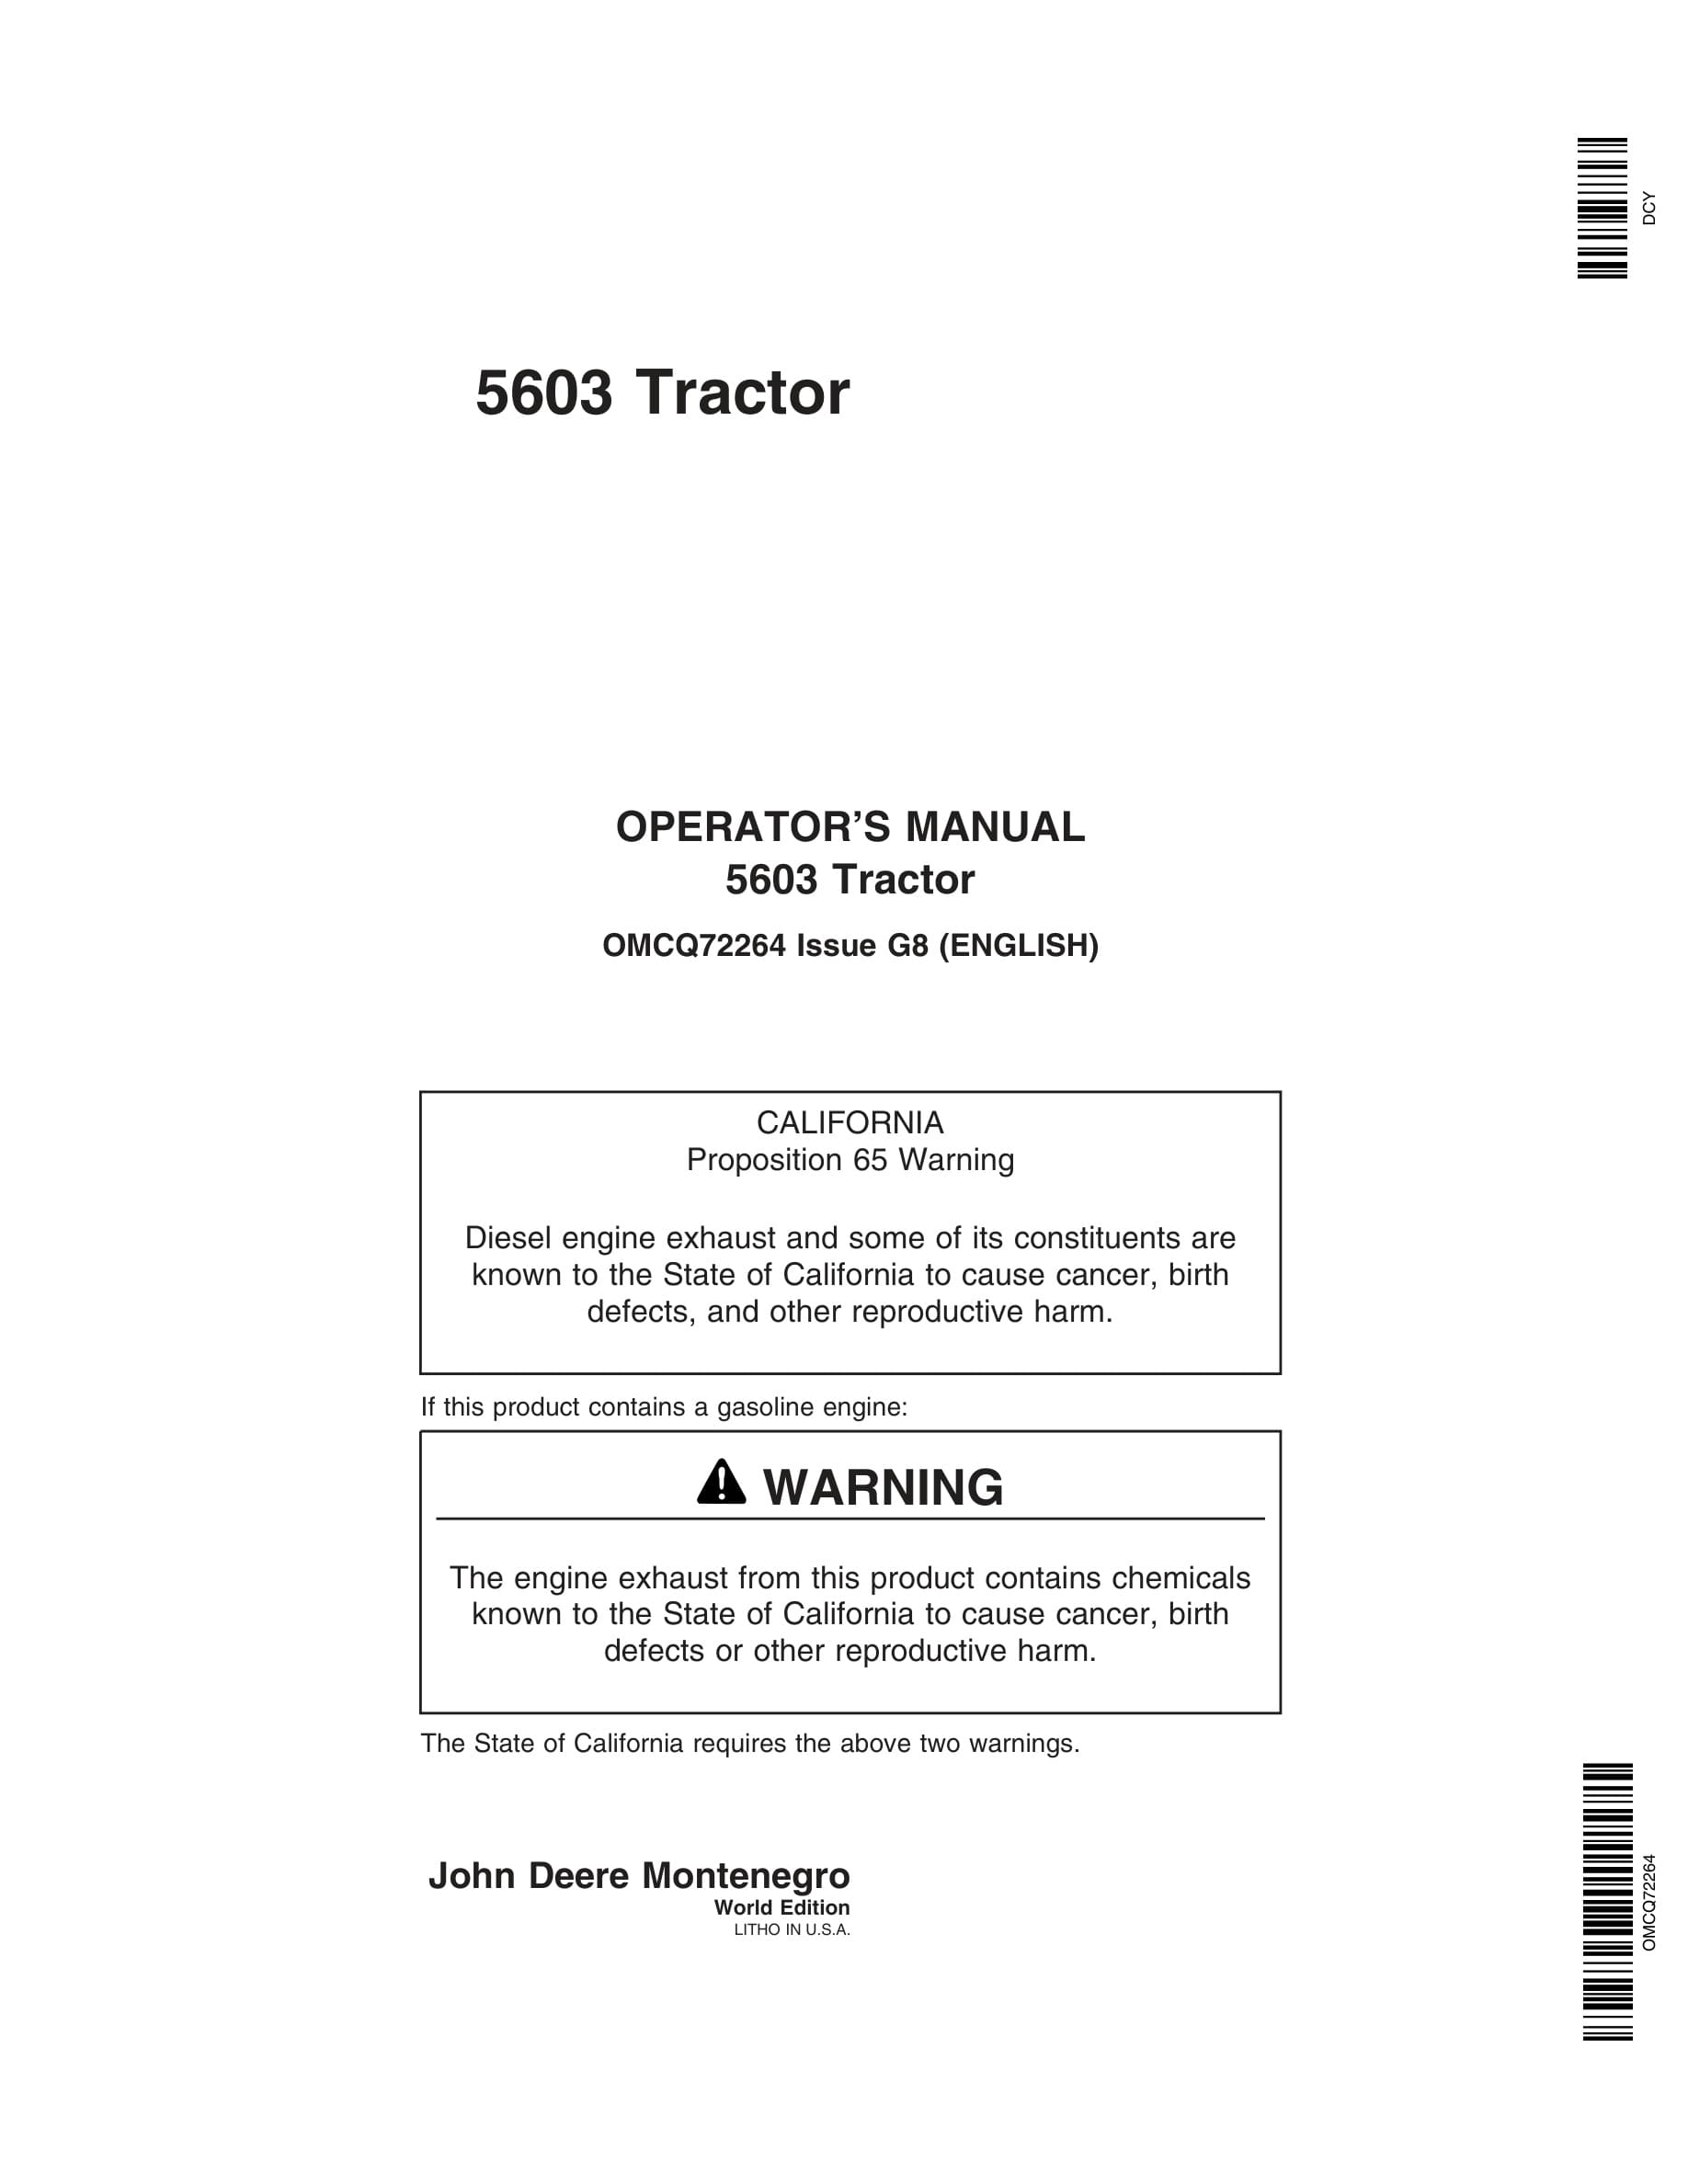 John Deere 5603 Tractors Operator Manual OMCQ72264-1